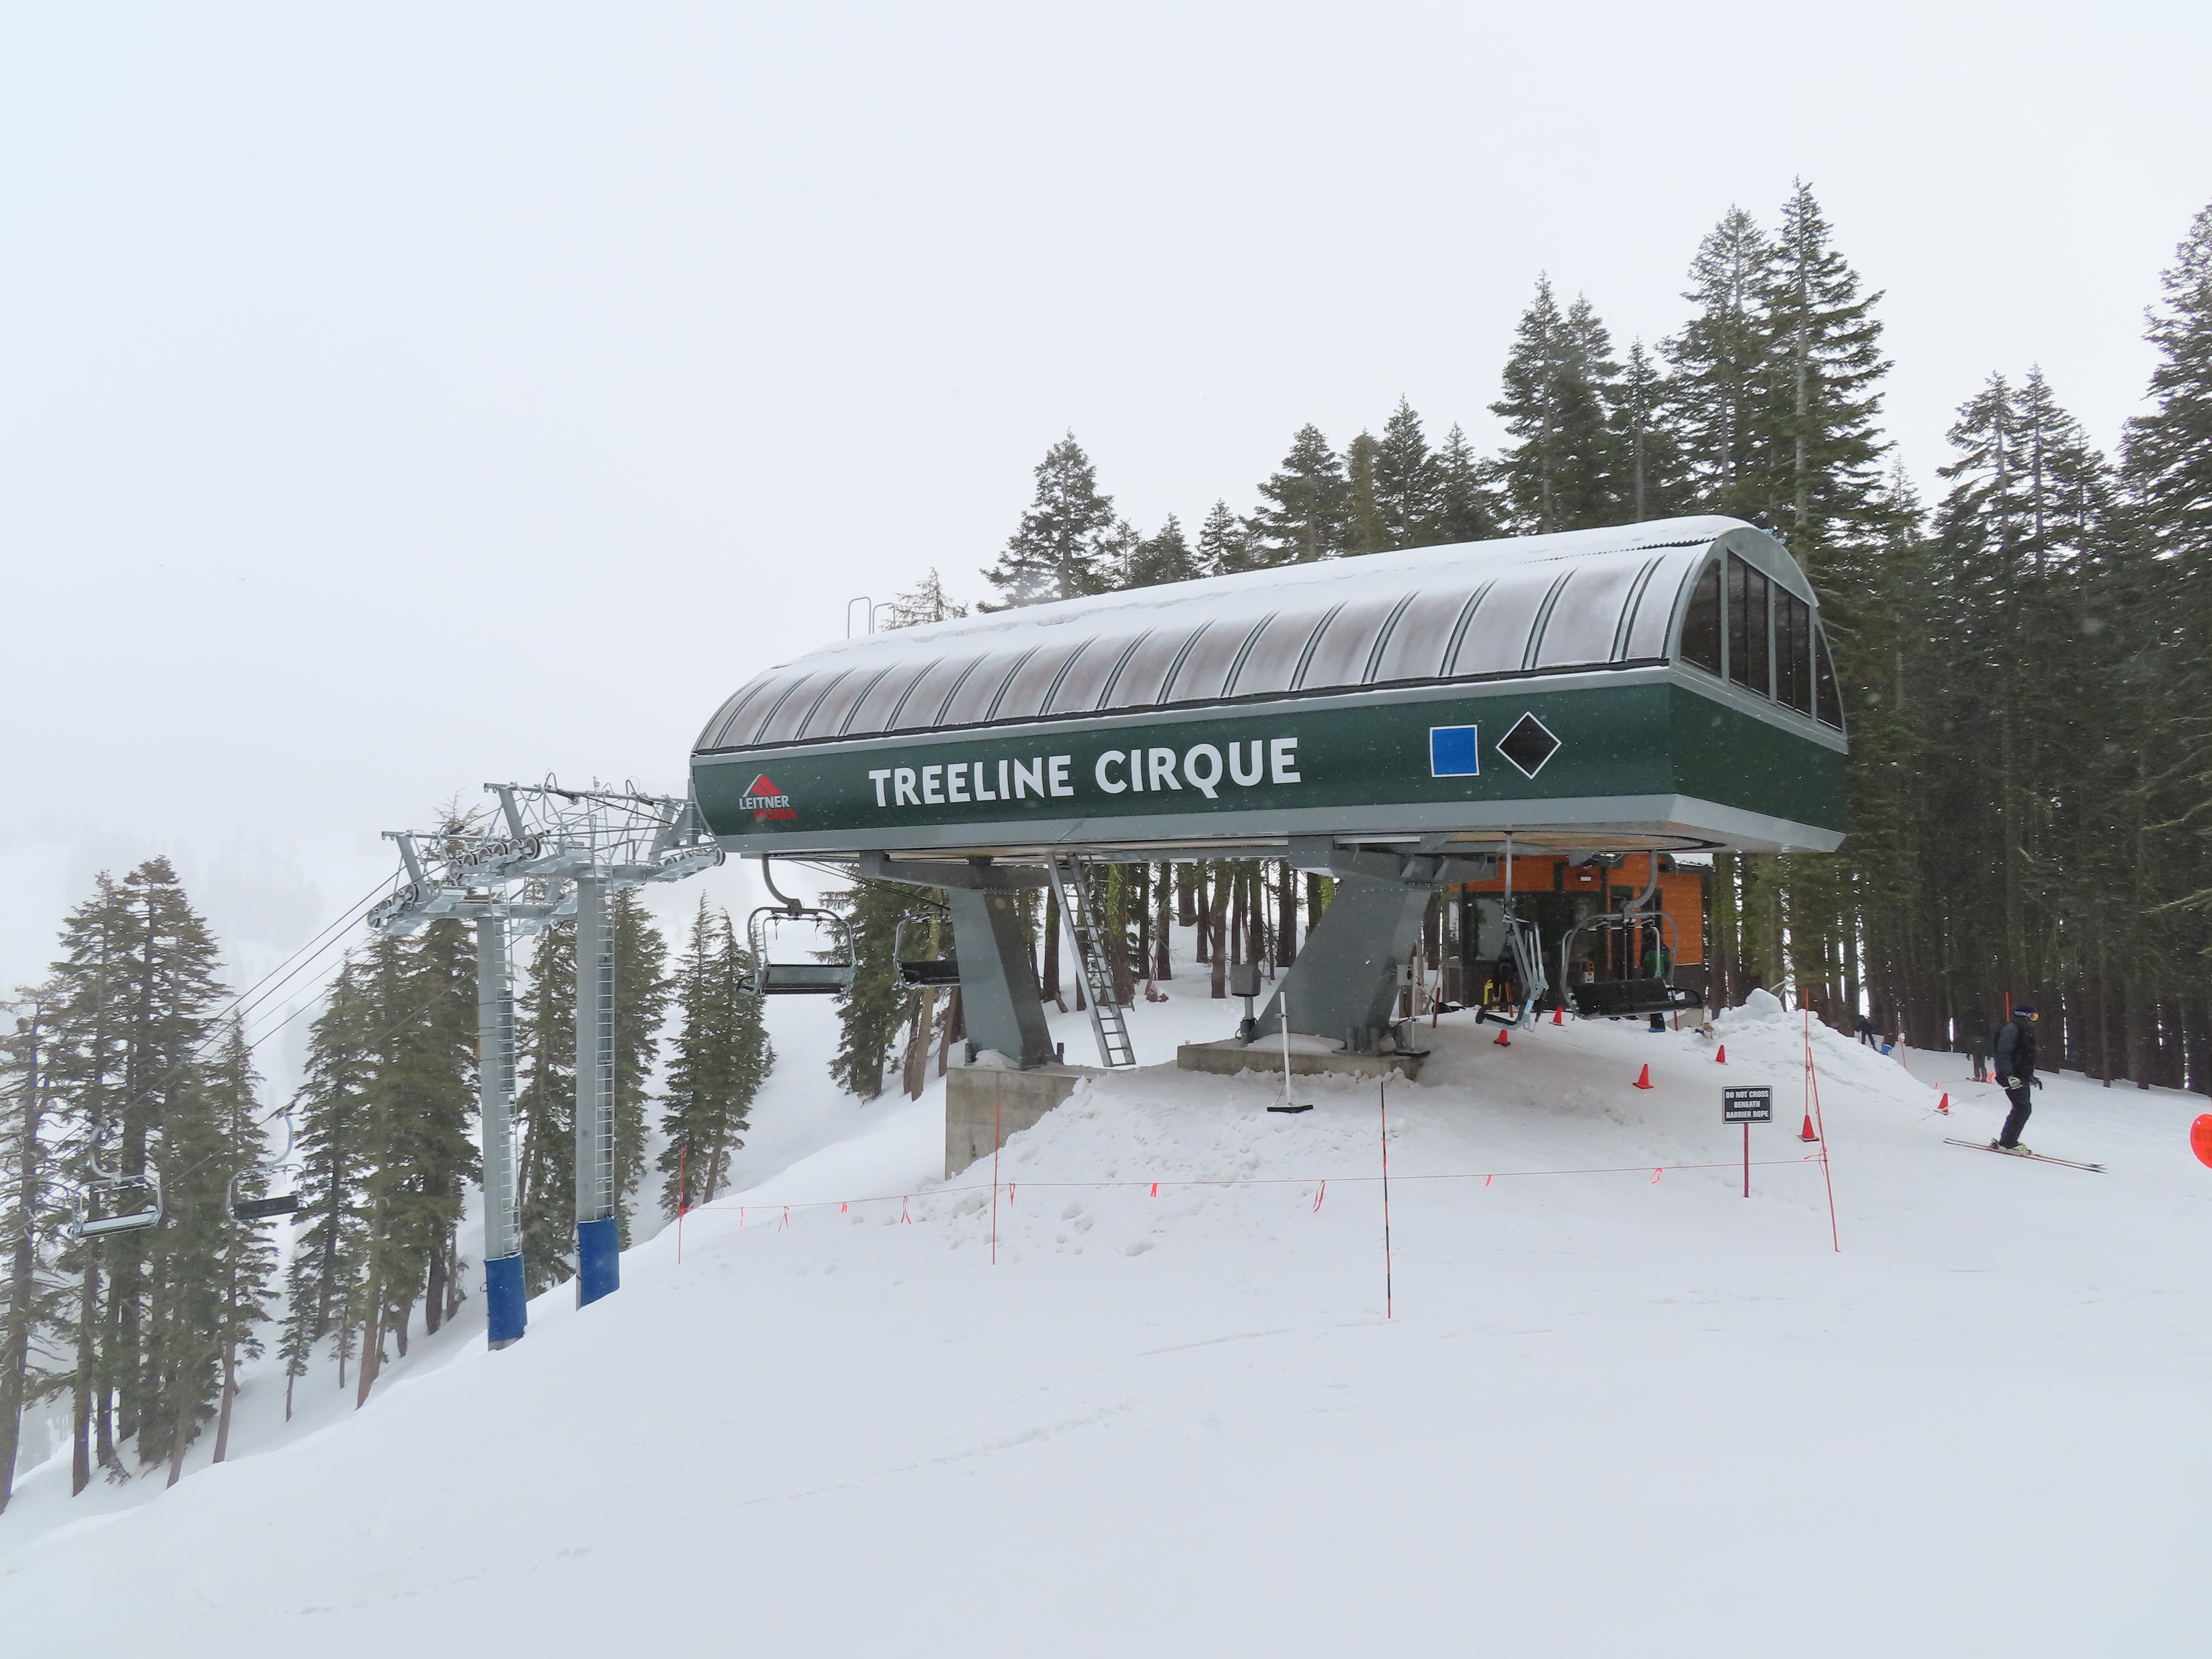 Treeline Cirque – Palisades Tahoe, CA – Lift Blog